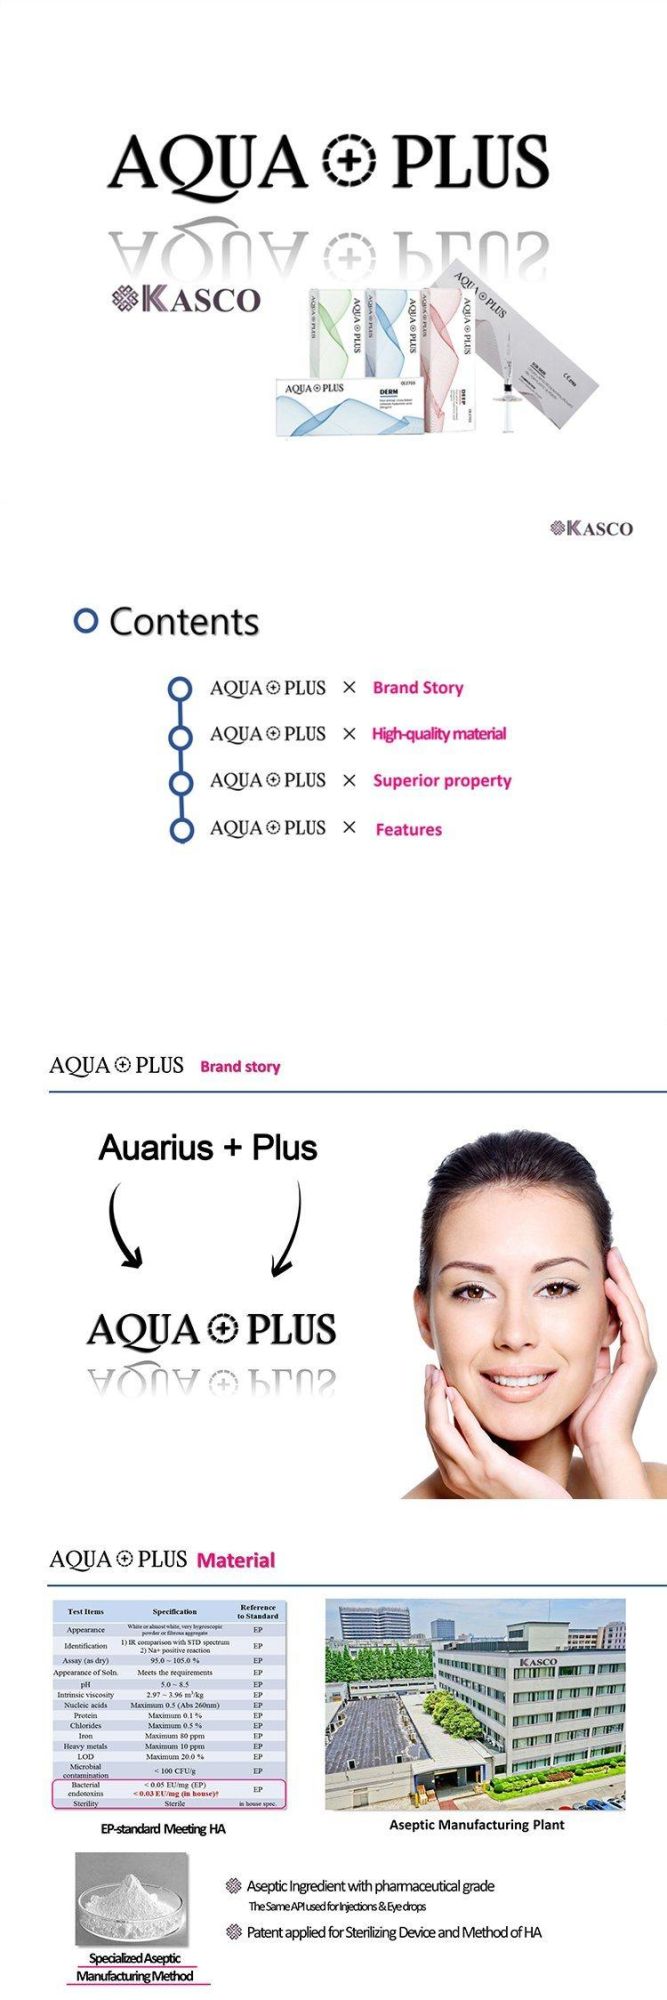 Aqua Plus 2ml Deep Hyaluronic Acid Injection Dermal Filler for Facial Reshape